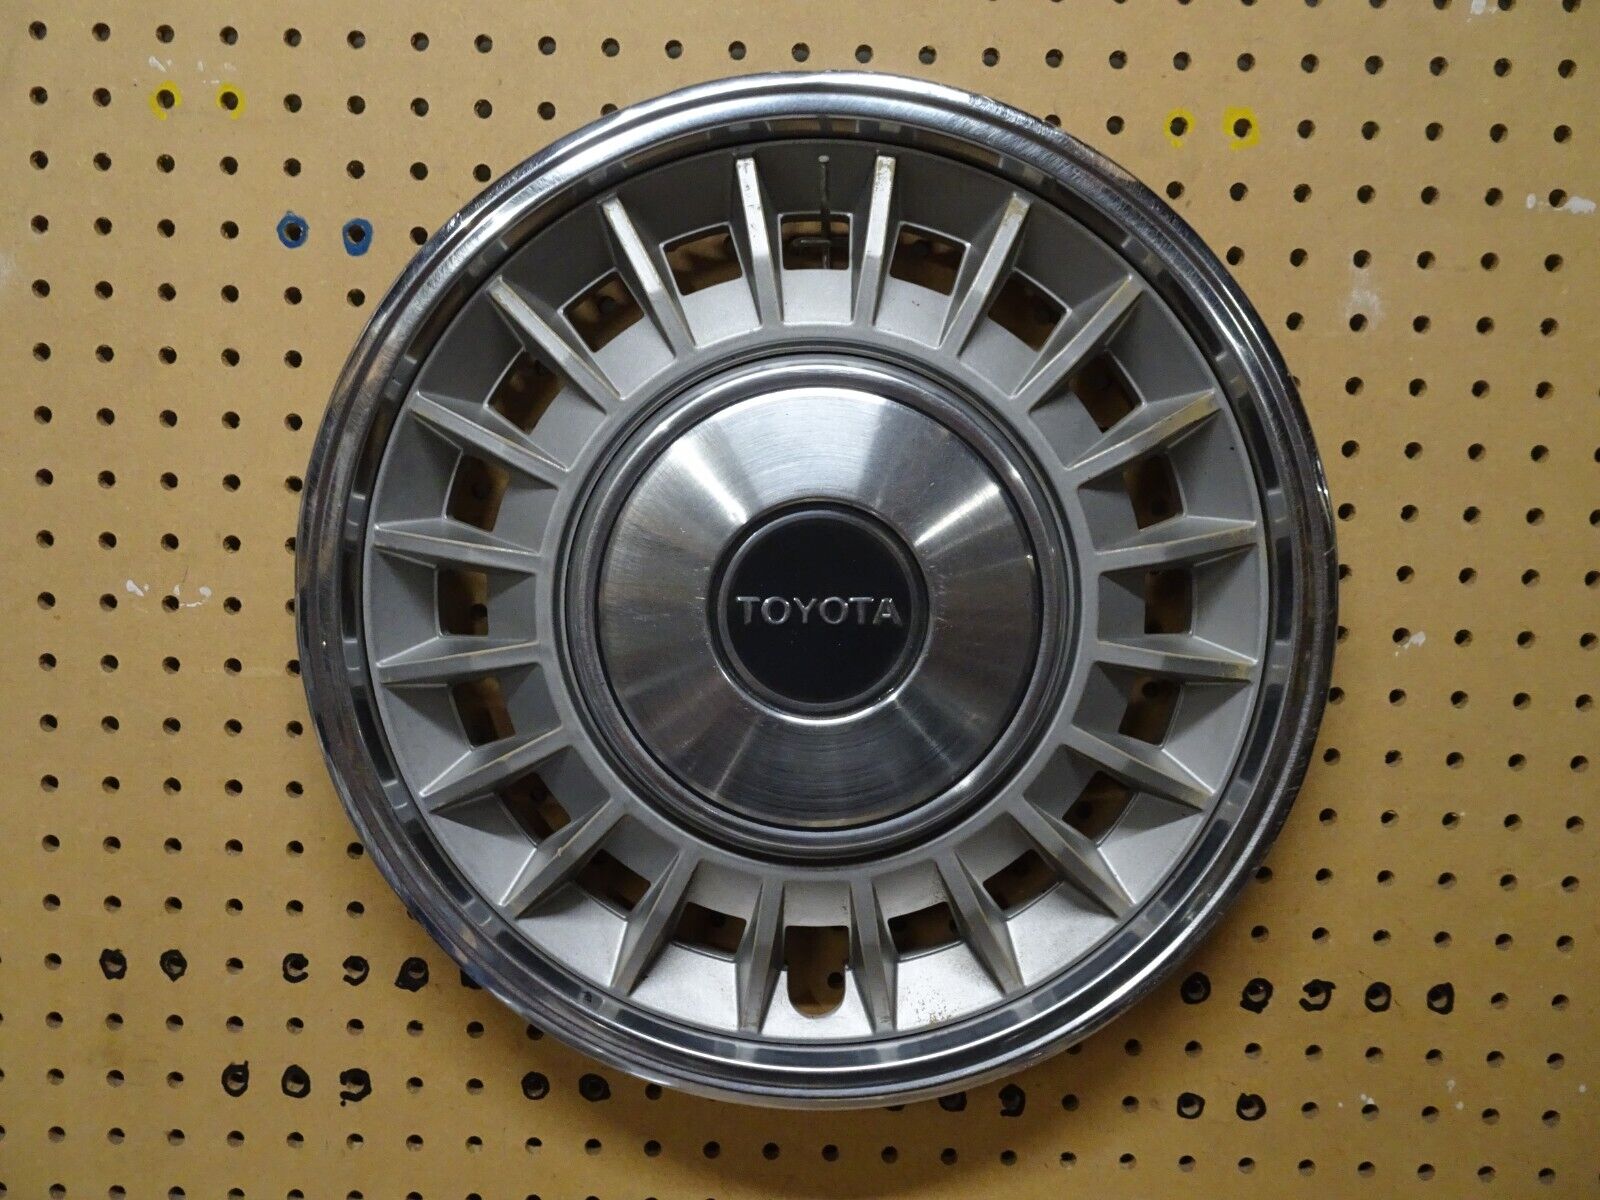 One 1980 1981 Toyota Corona 14 inch hubcap wheel cover